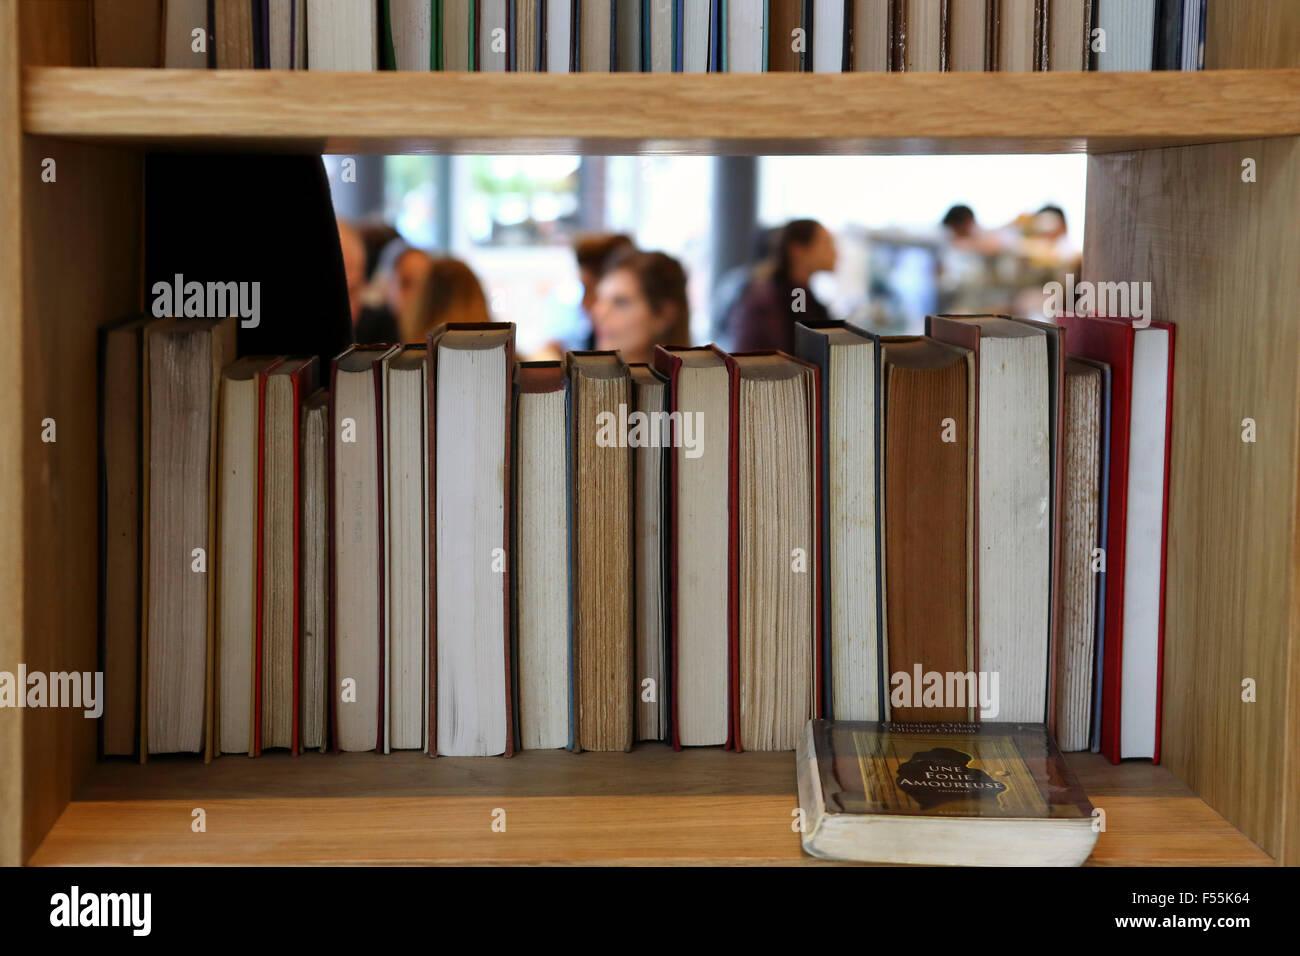 Estantería con estantes geométricos para libros marrón Büchen